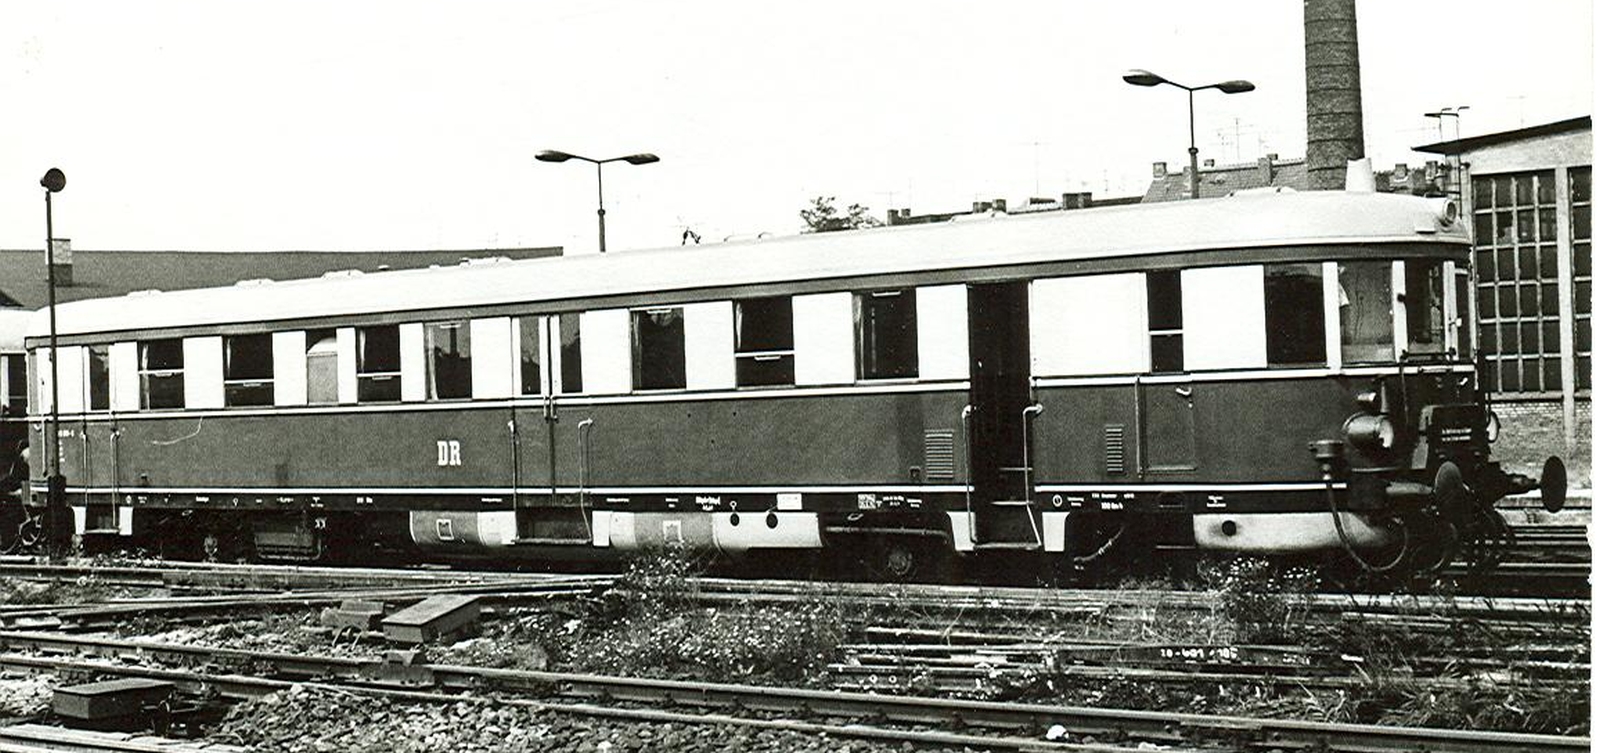 A railcar with an Essen floor plan in 1975 in Berlin